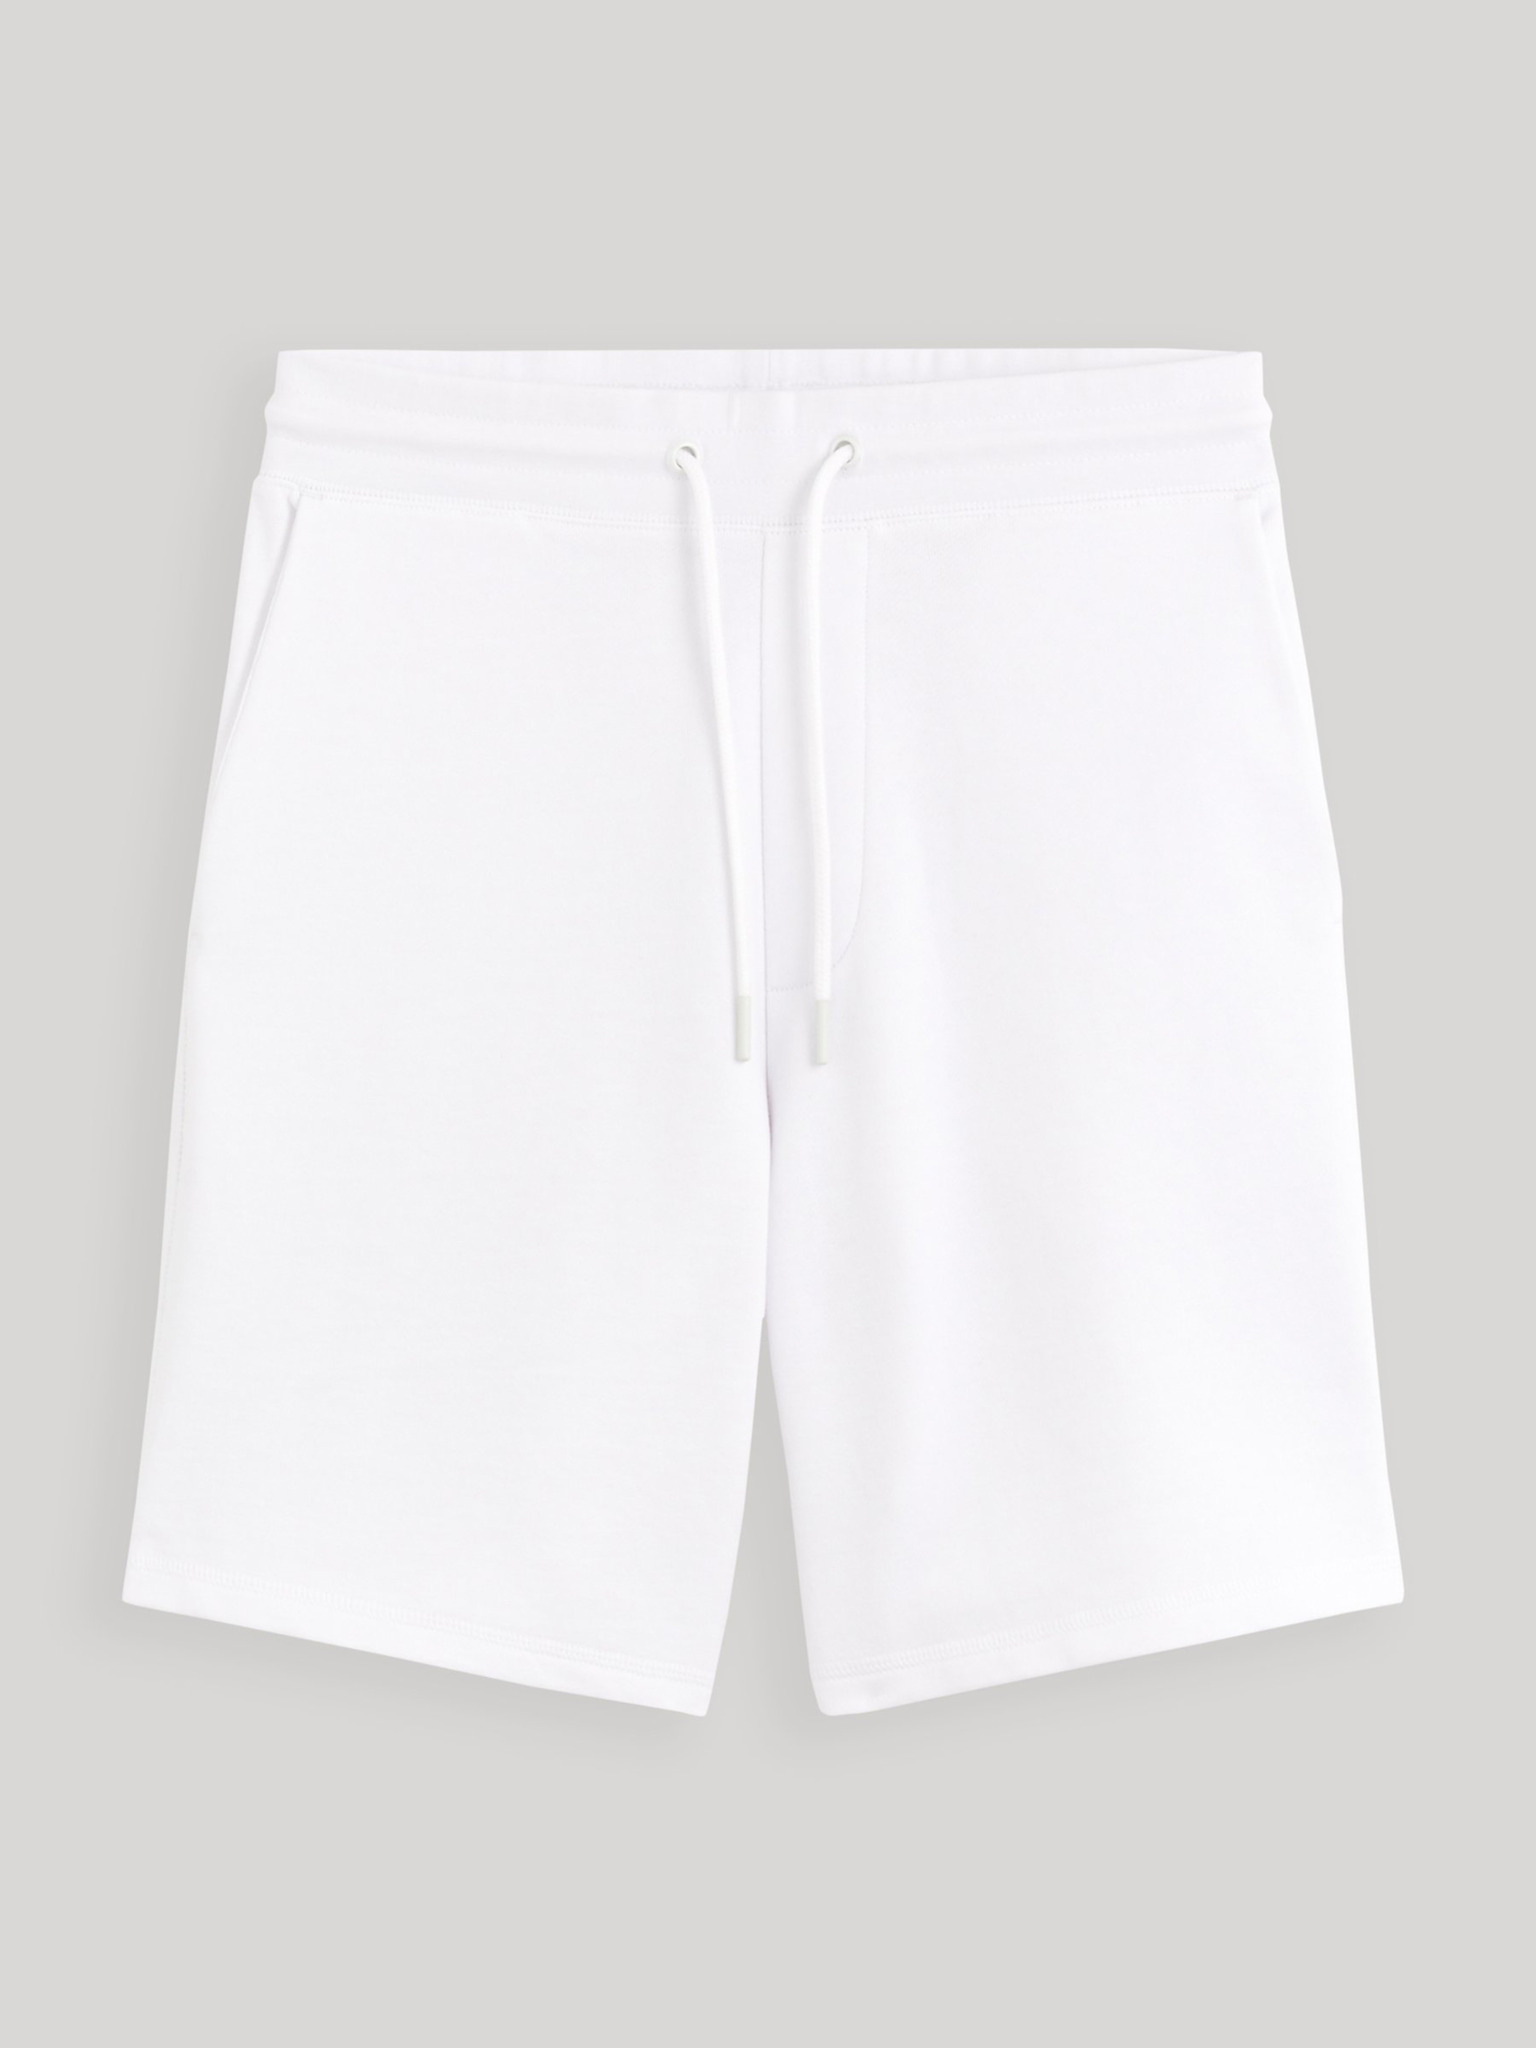 AESTHETIC, white short shorts, png | PNGEgg